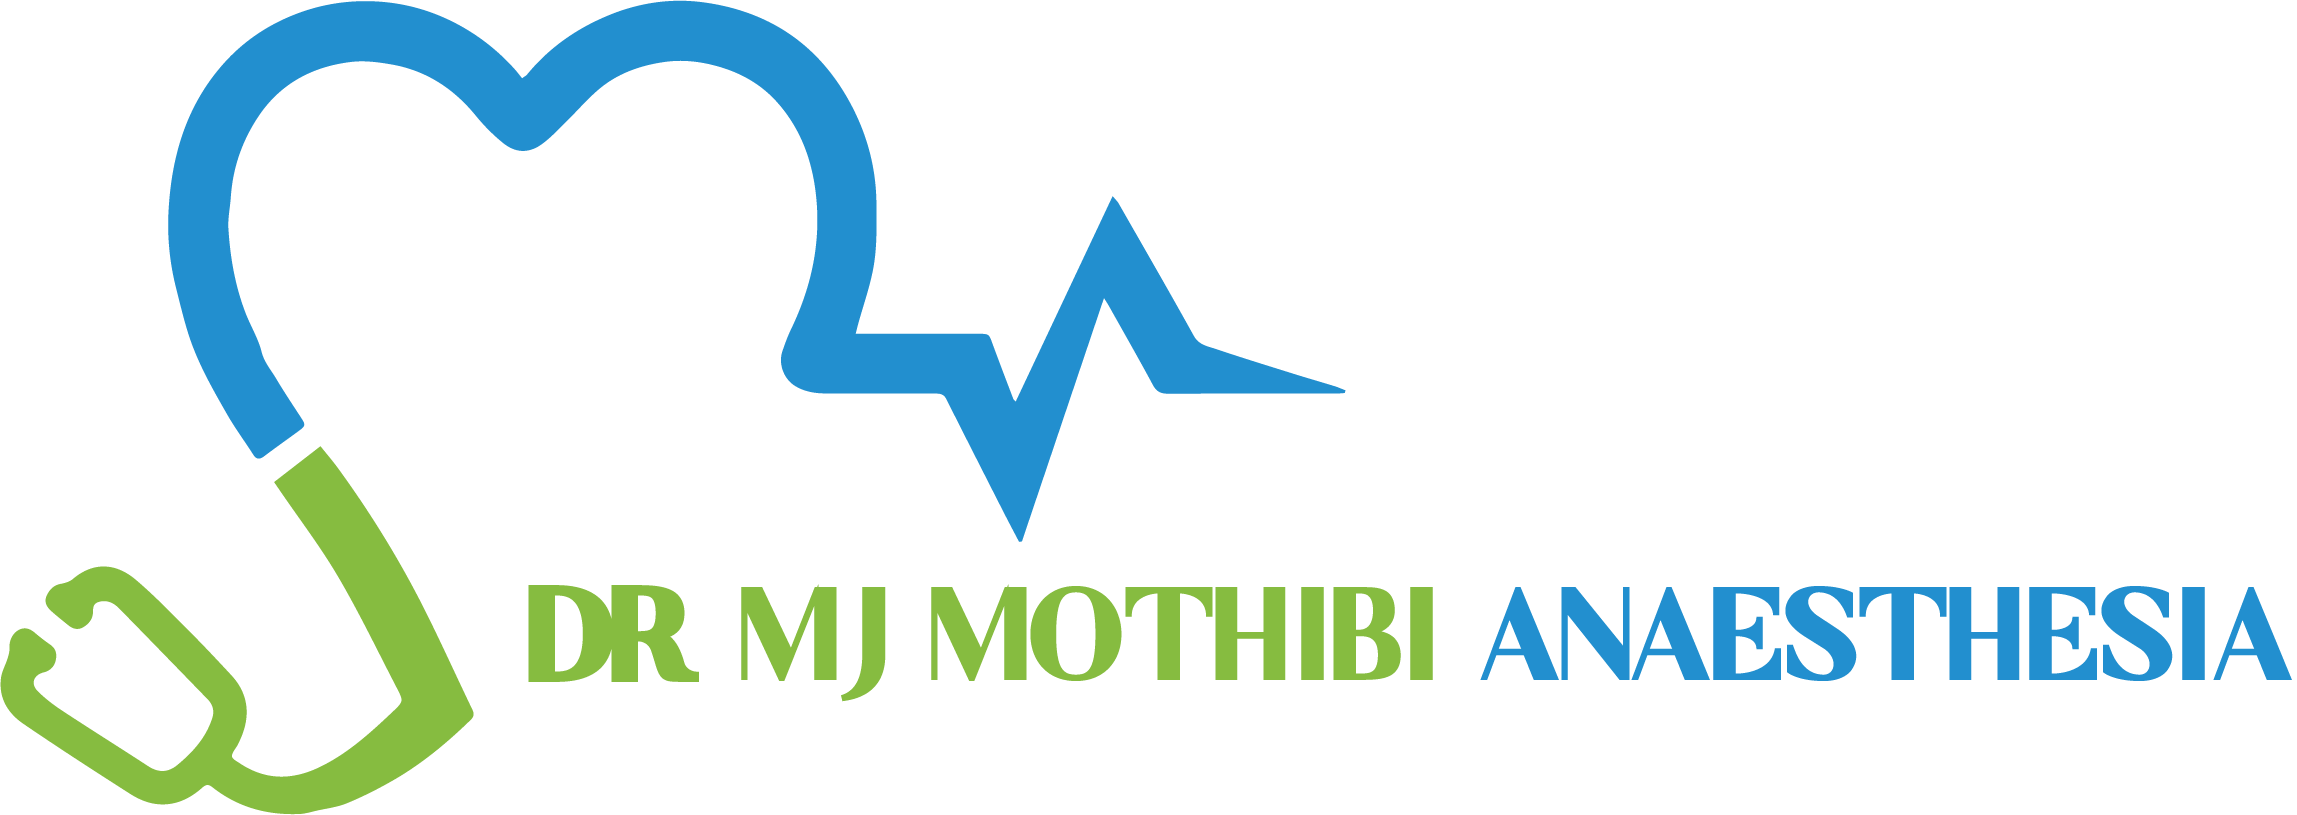 Dr MJ Mothibi Anaesthesia Inc